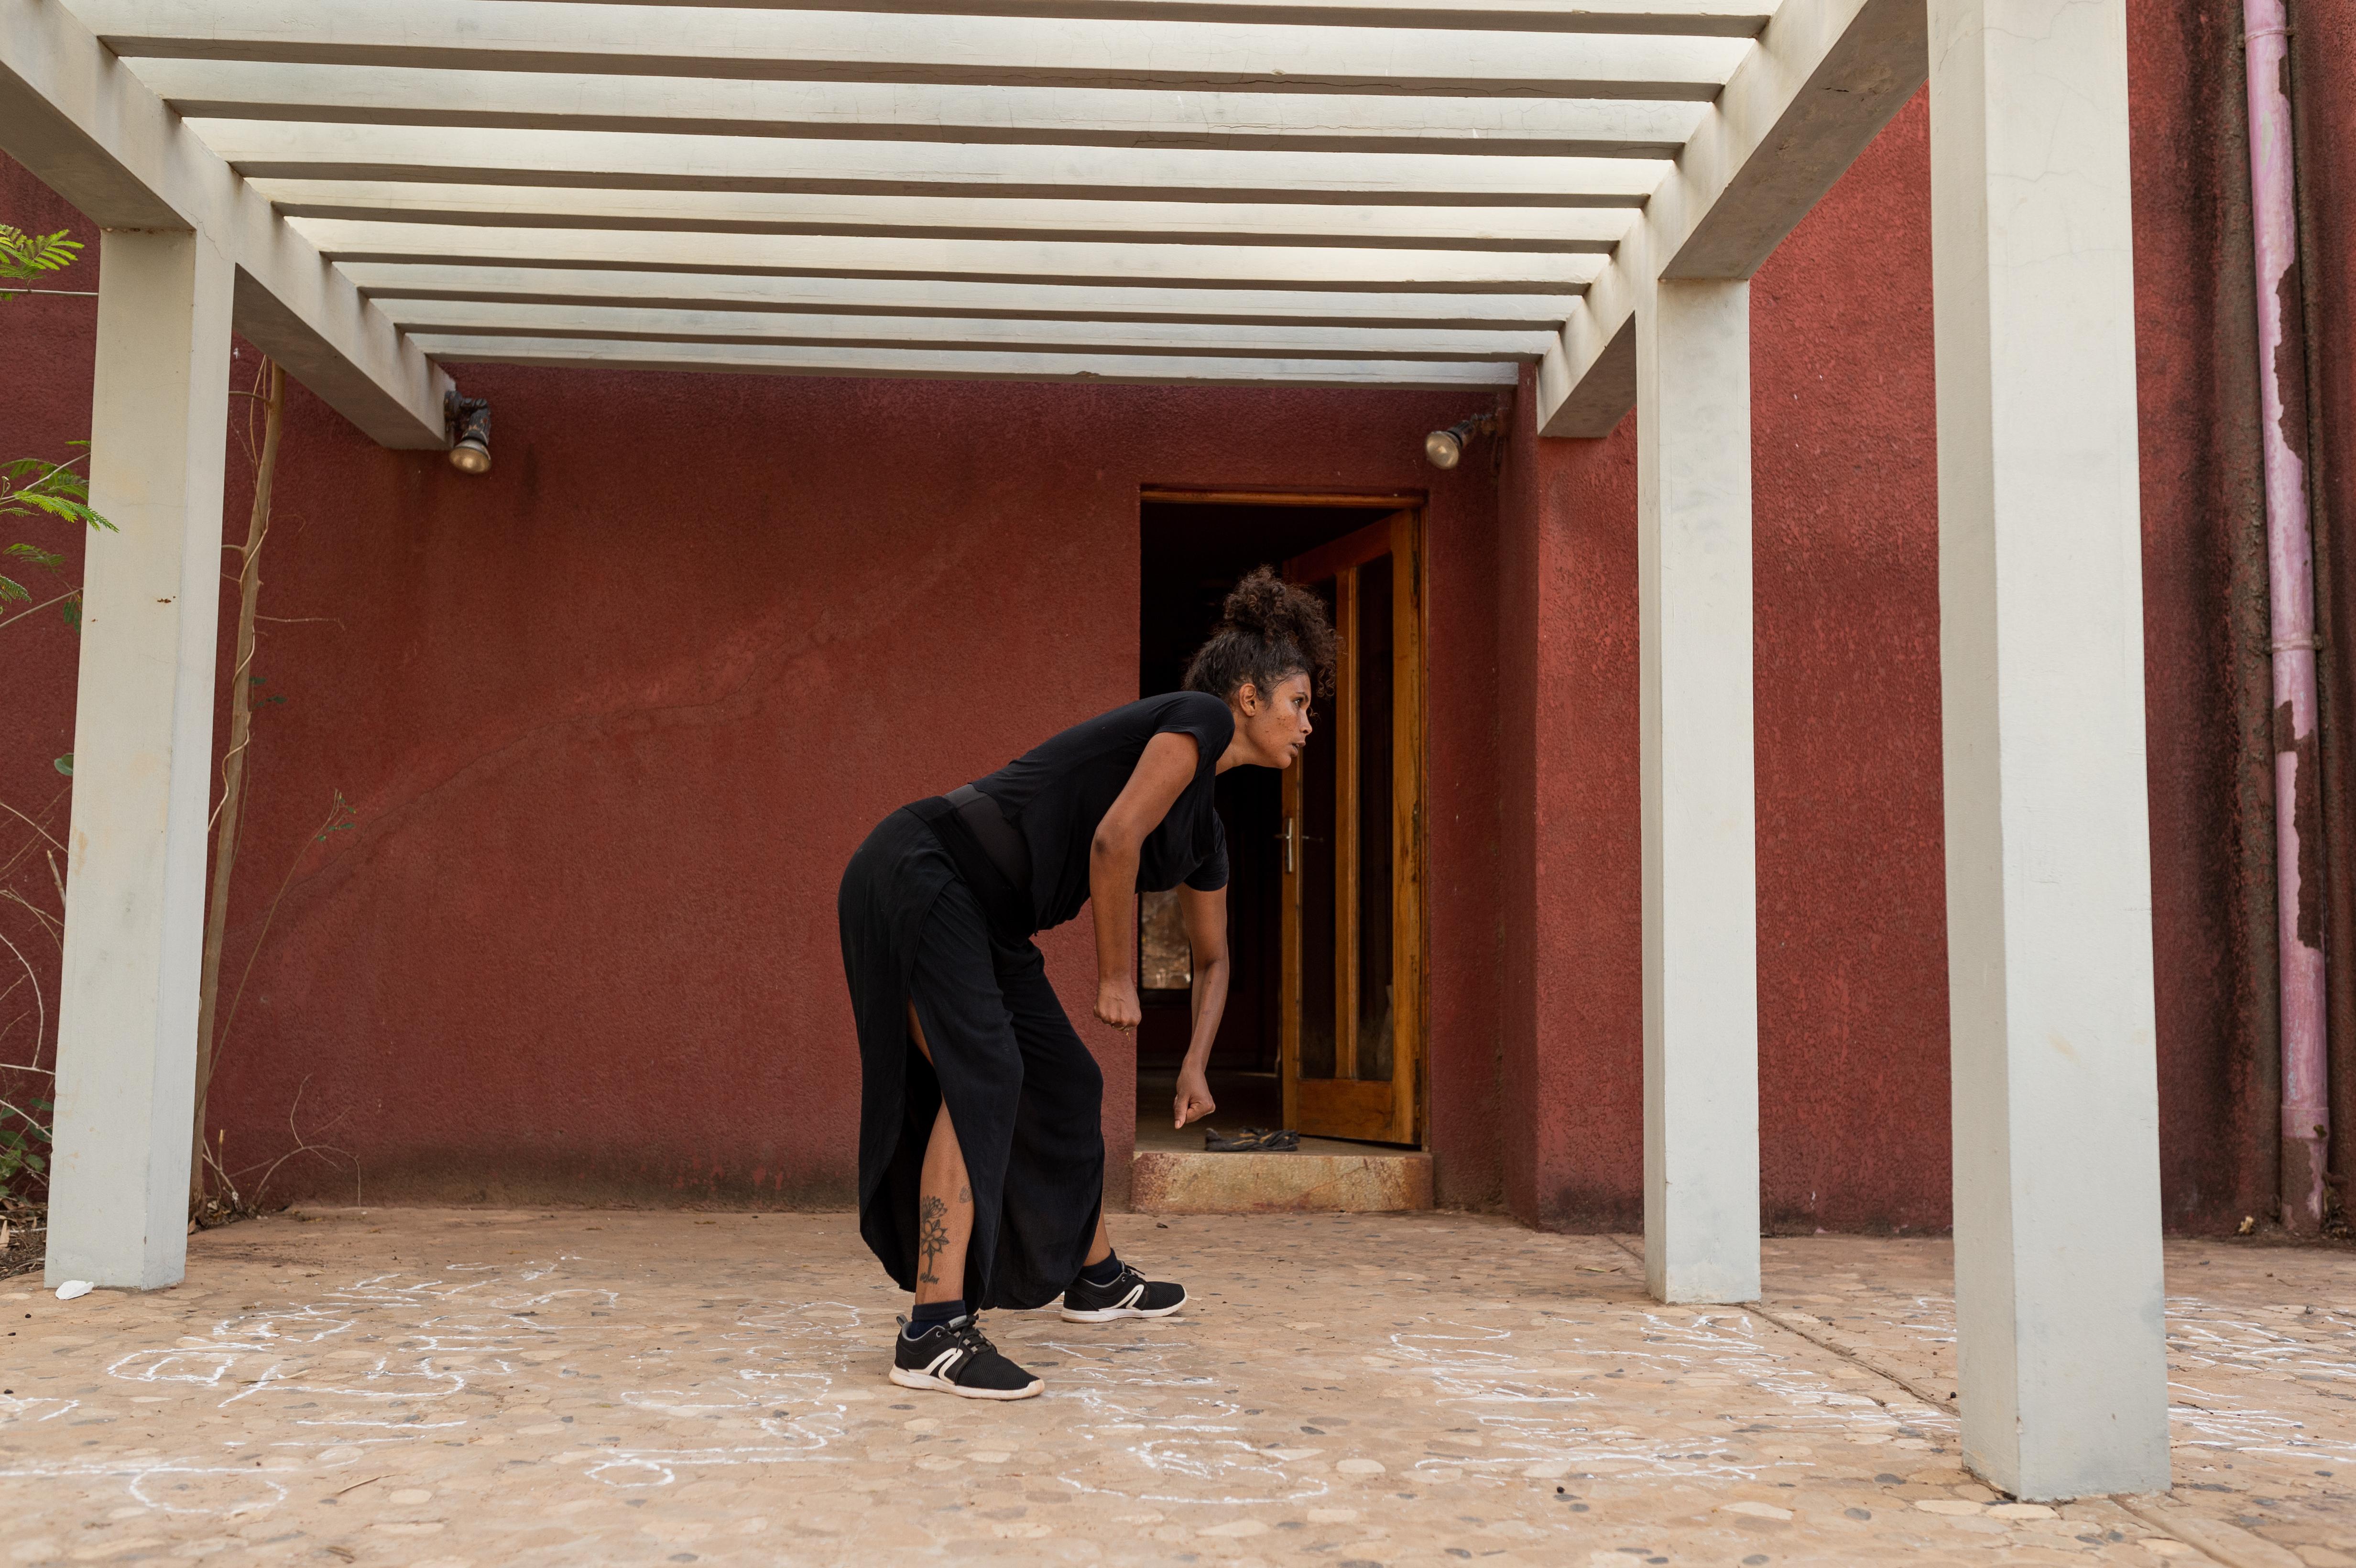 Dancer leaning forward in an oudoor courtyard